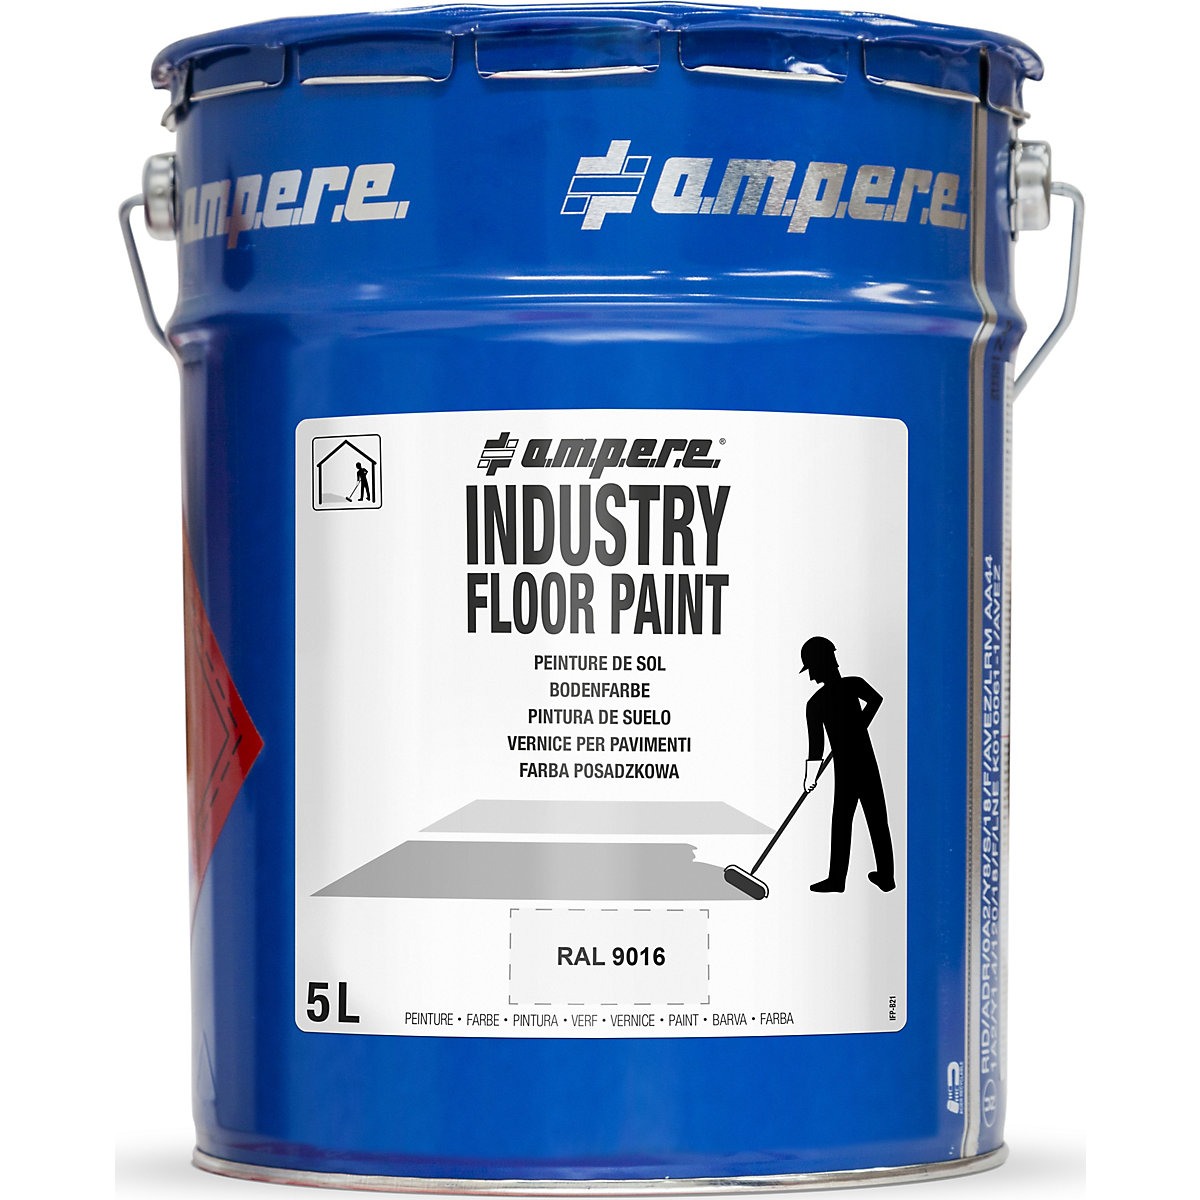 a.m.p.e.r.e Bodenmarkierungsfarbe Industry Floor Paint®, Inhalt 5 l, weiß